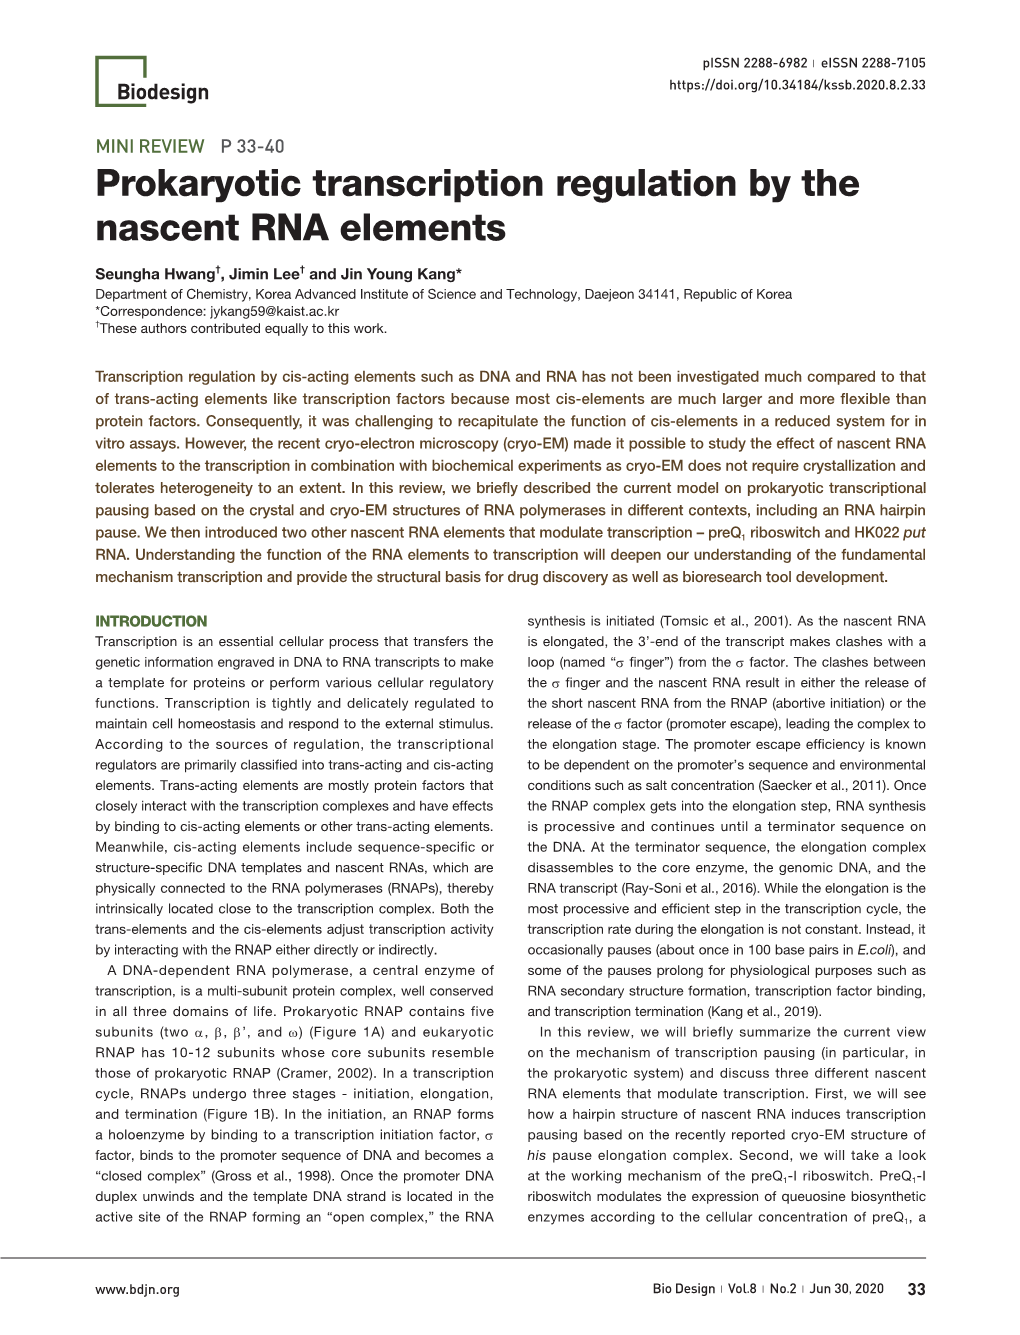 Prokaryotic Transcription Regulation by the Nascent RNA Elements